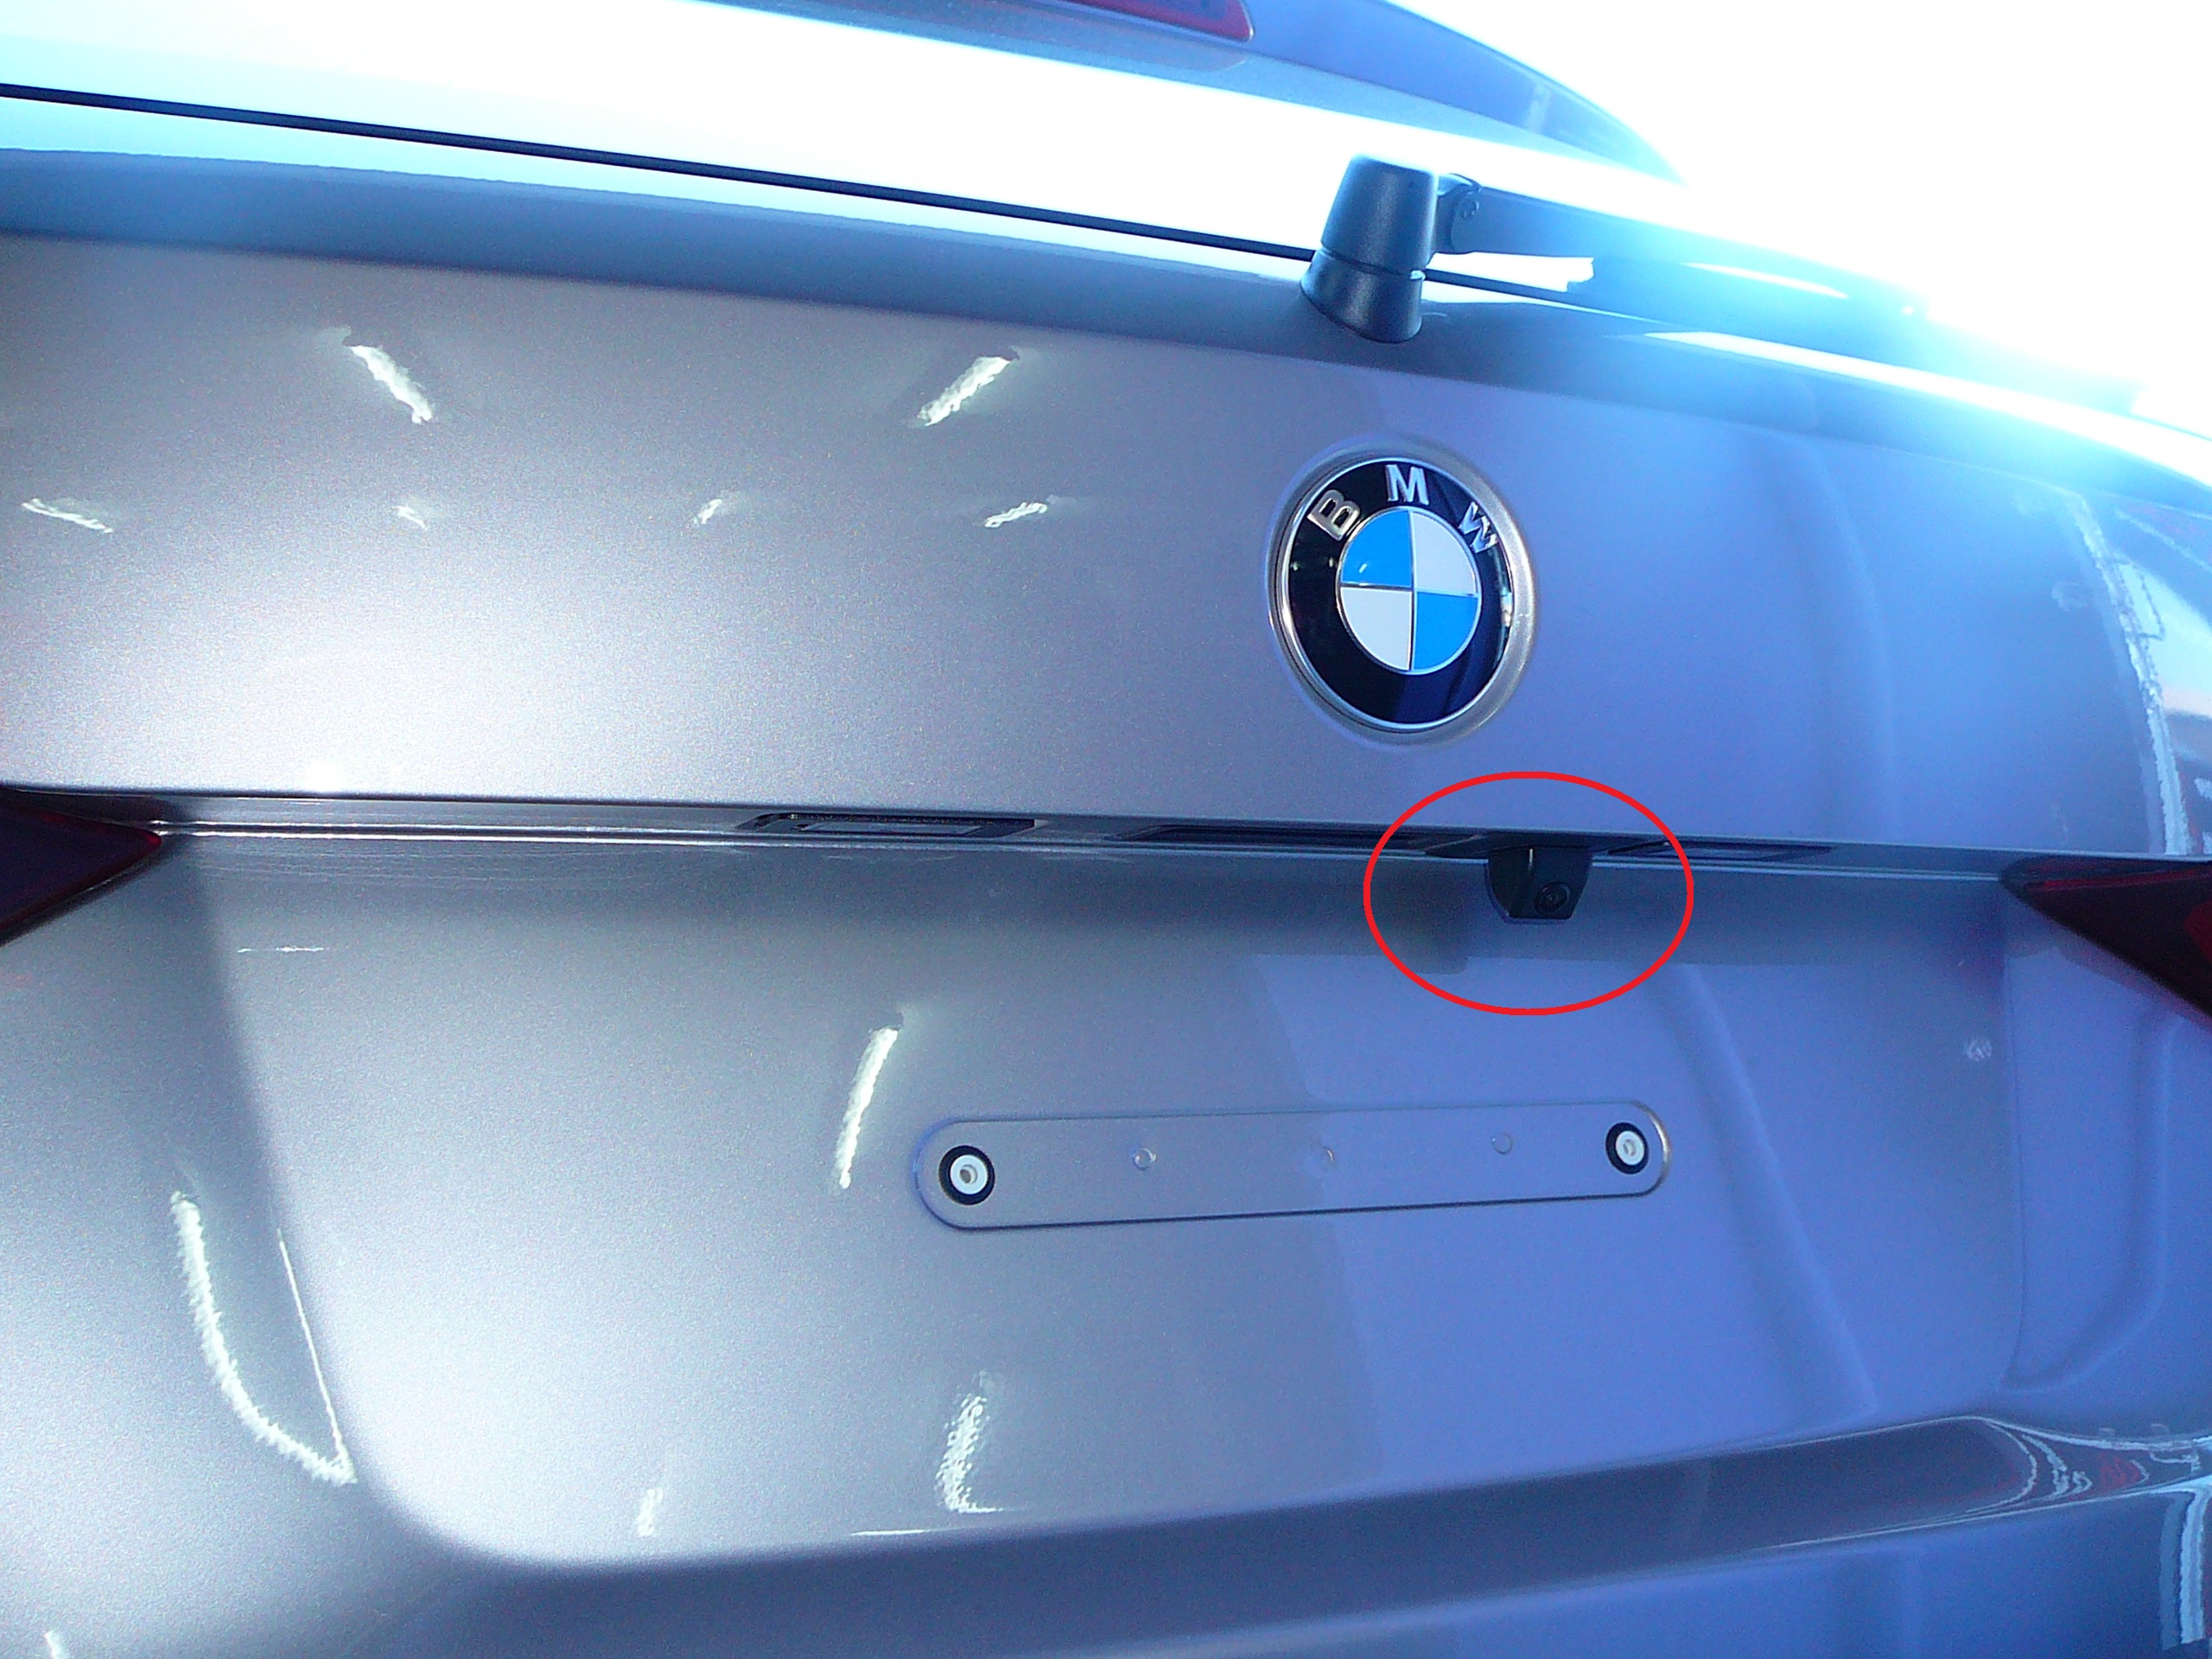 BMW X1 2013, Reverse Camera Integration on factory BMW screen